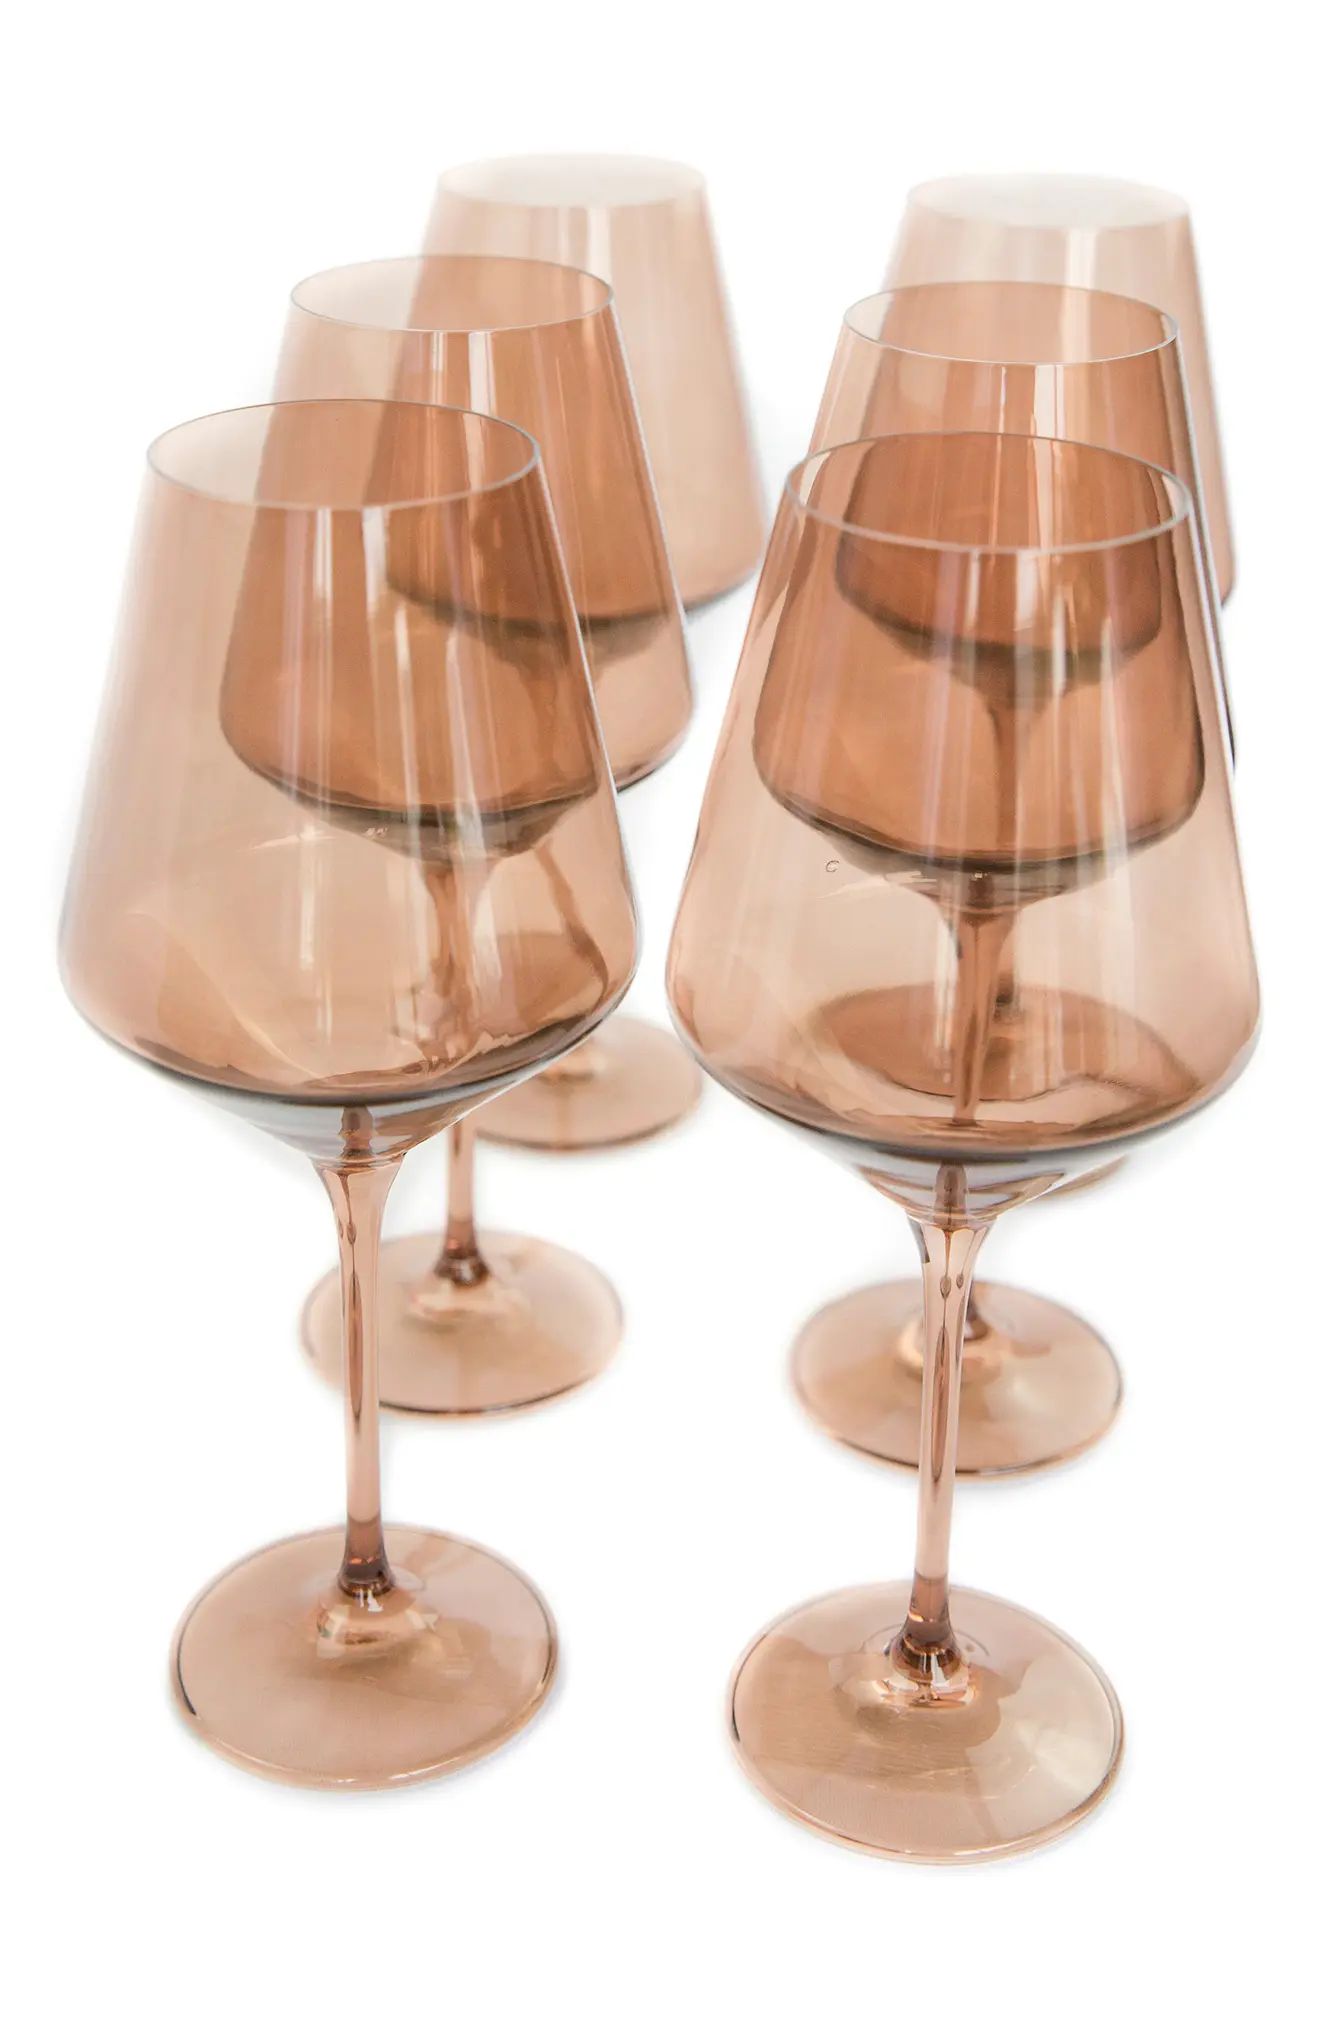 Estelle Colored Glass Set of 6 Stem Wineglasses in Amber Smoke at Nordstrom | Nordstrom